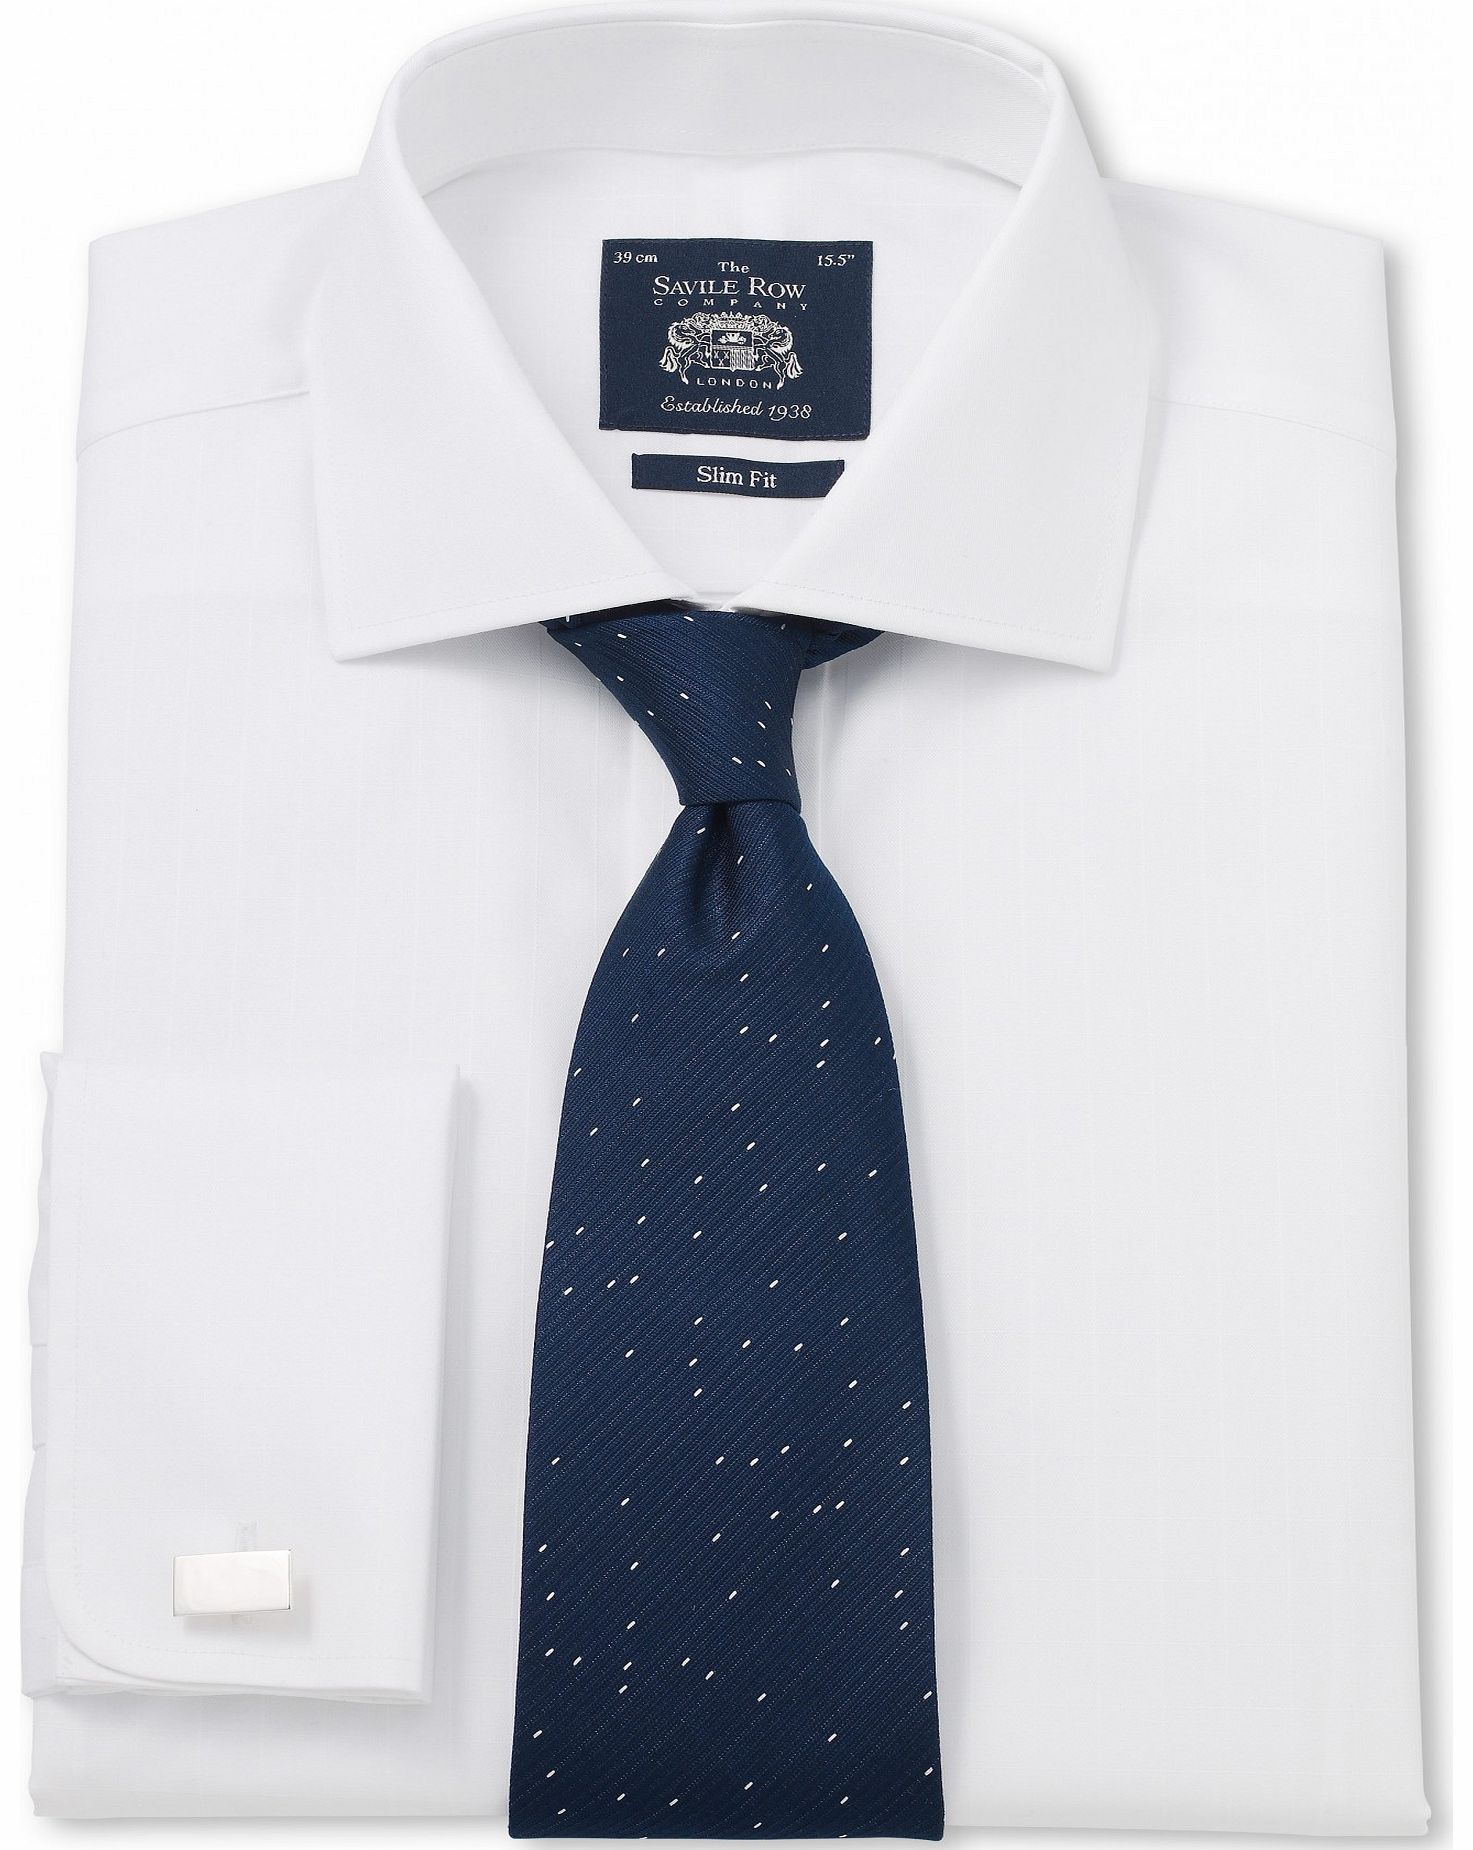 Savile Row Company White Poplin Check Slim Fit Shirt 16`` Double